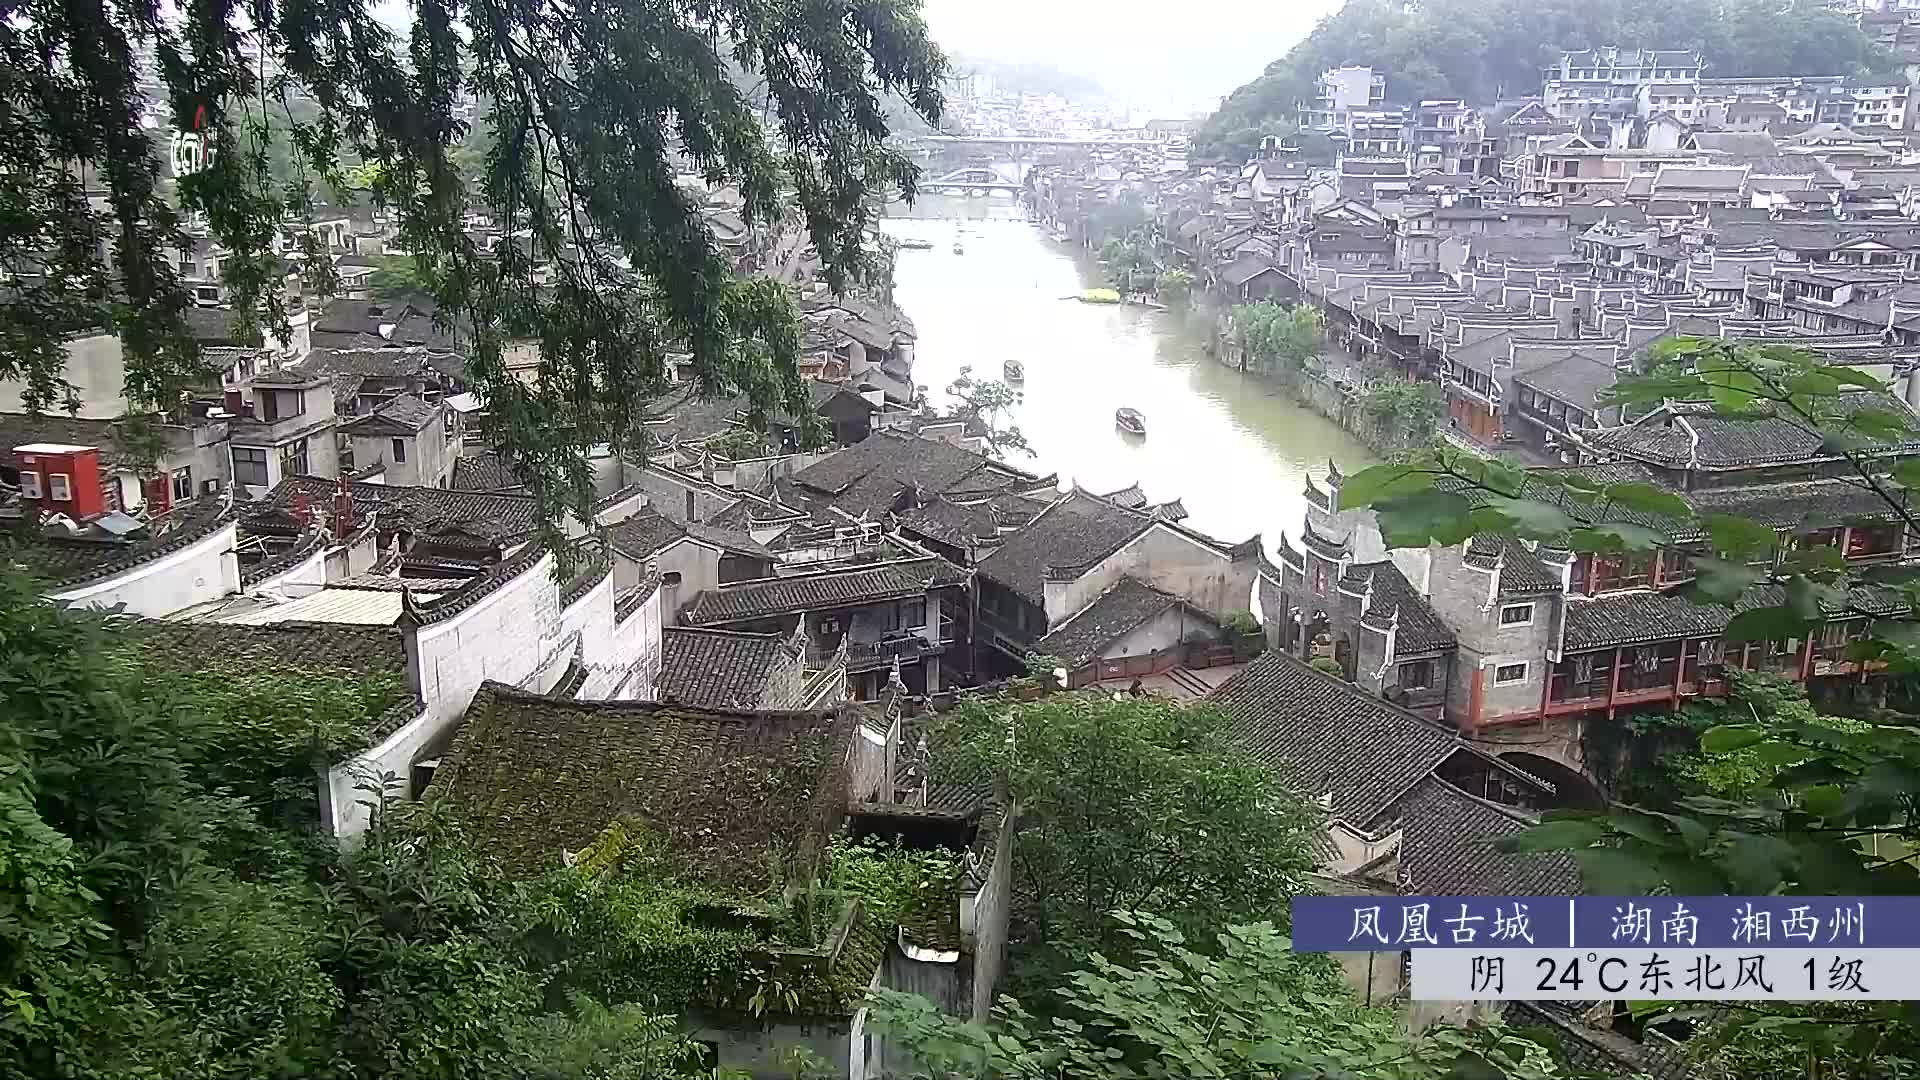 Fenghuang Sa. 09:48